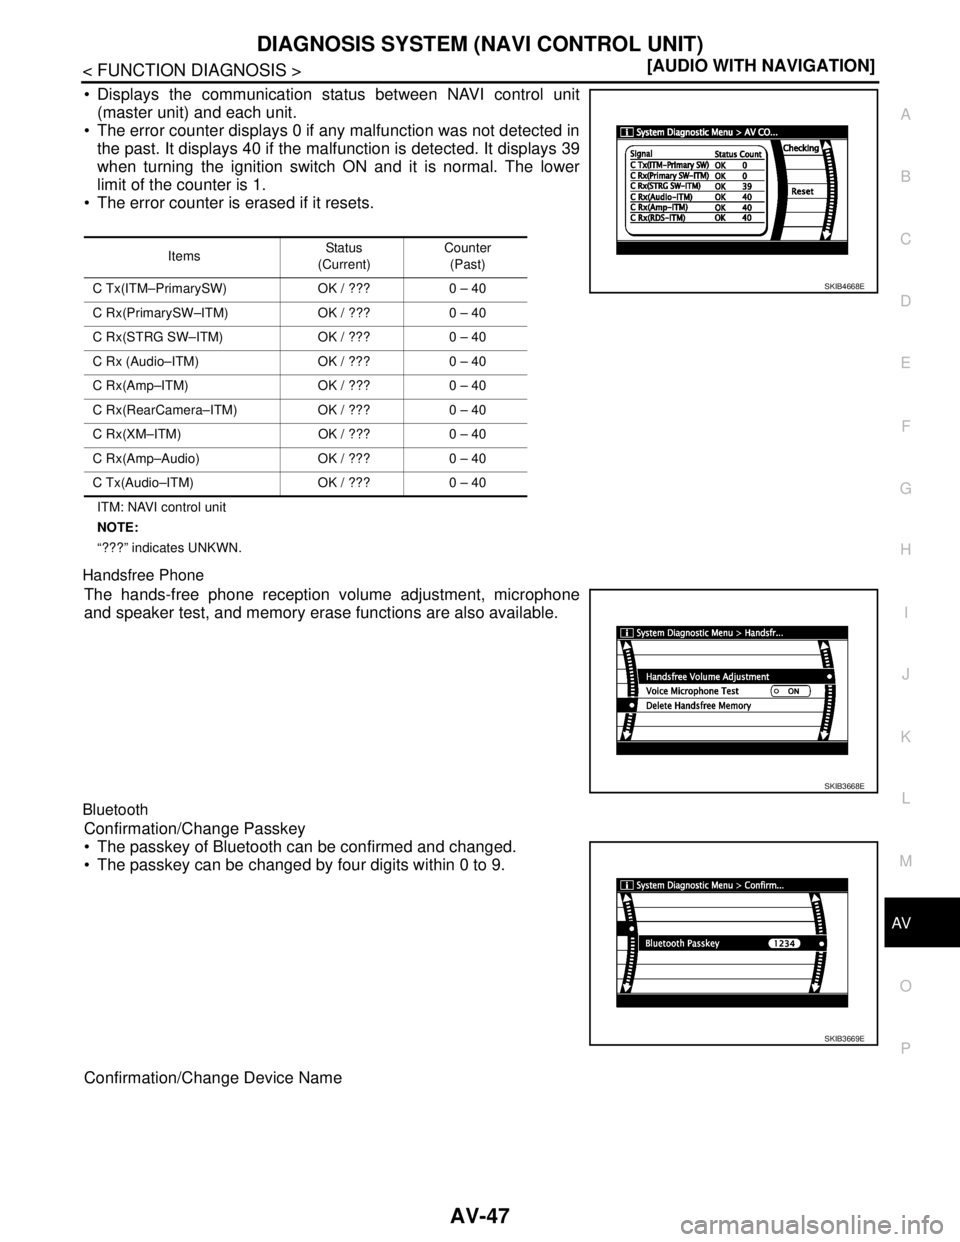 NISSAN TIIDA 2007  Service Repair Manual AV
DIAGNOSIS SYSTEM (NAVI CONTROL UNIT)
AV-47
< FUNCTION DIAGNOSIS >[AUDIO WITH NAVIGATION]
C
D
E
F
G
H
I
J
K
L
MB A
O
P
 Displays the communication status between NAVI control unit
(master unit) and